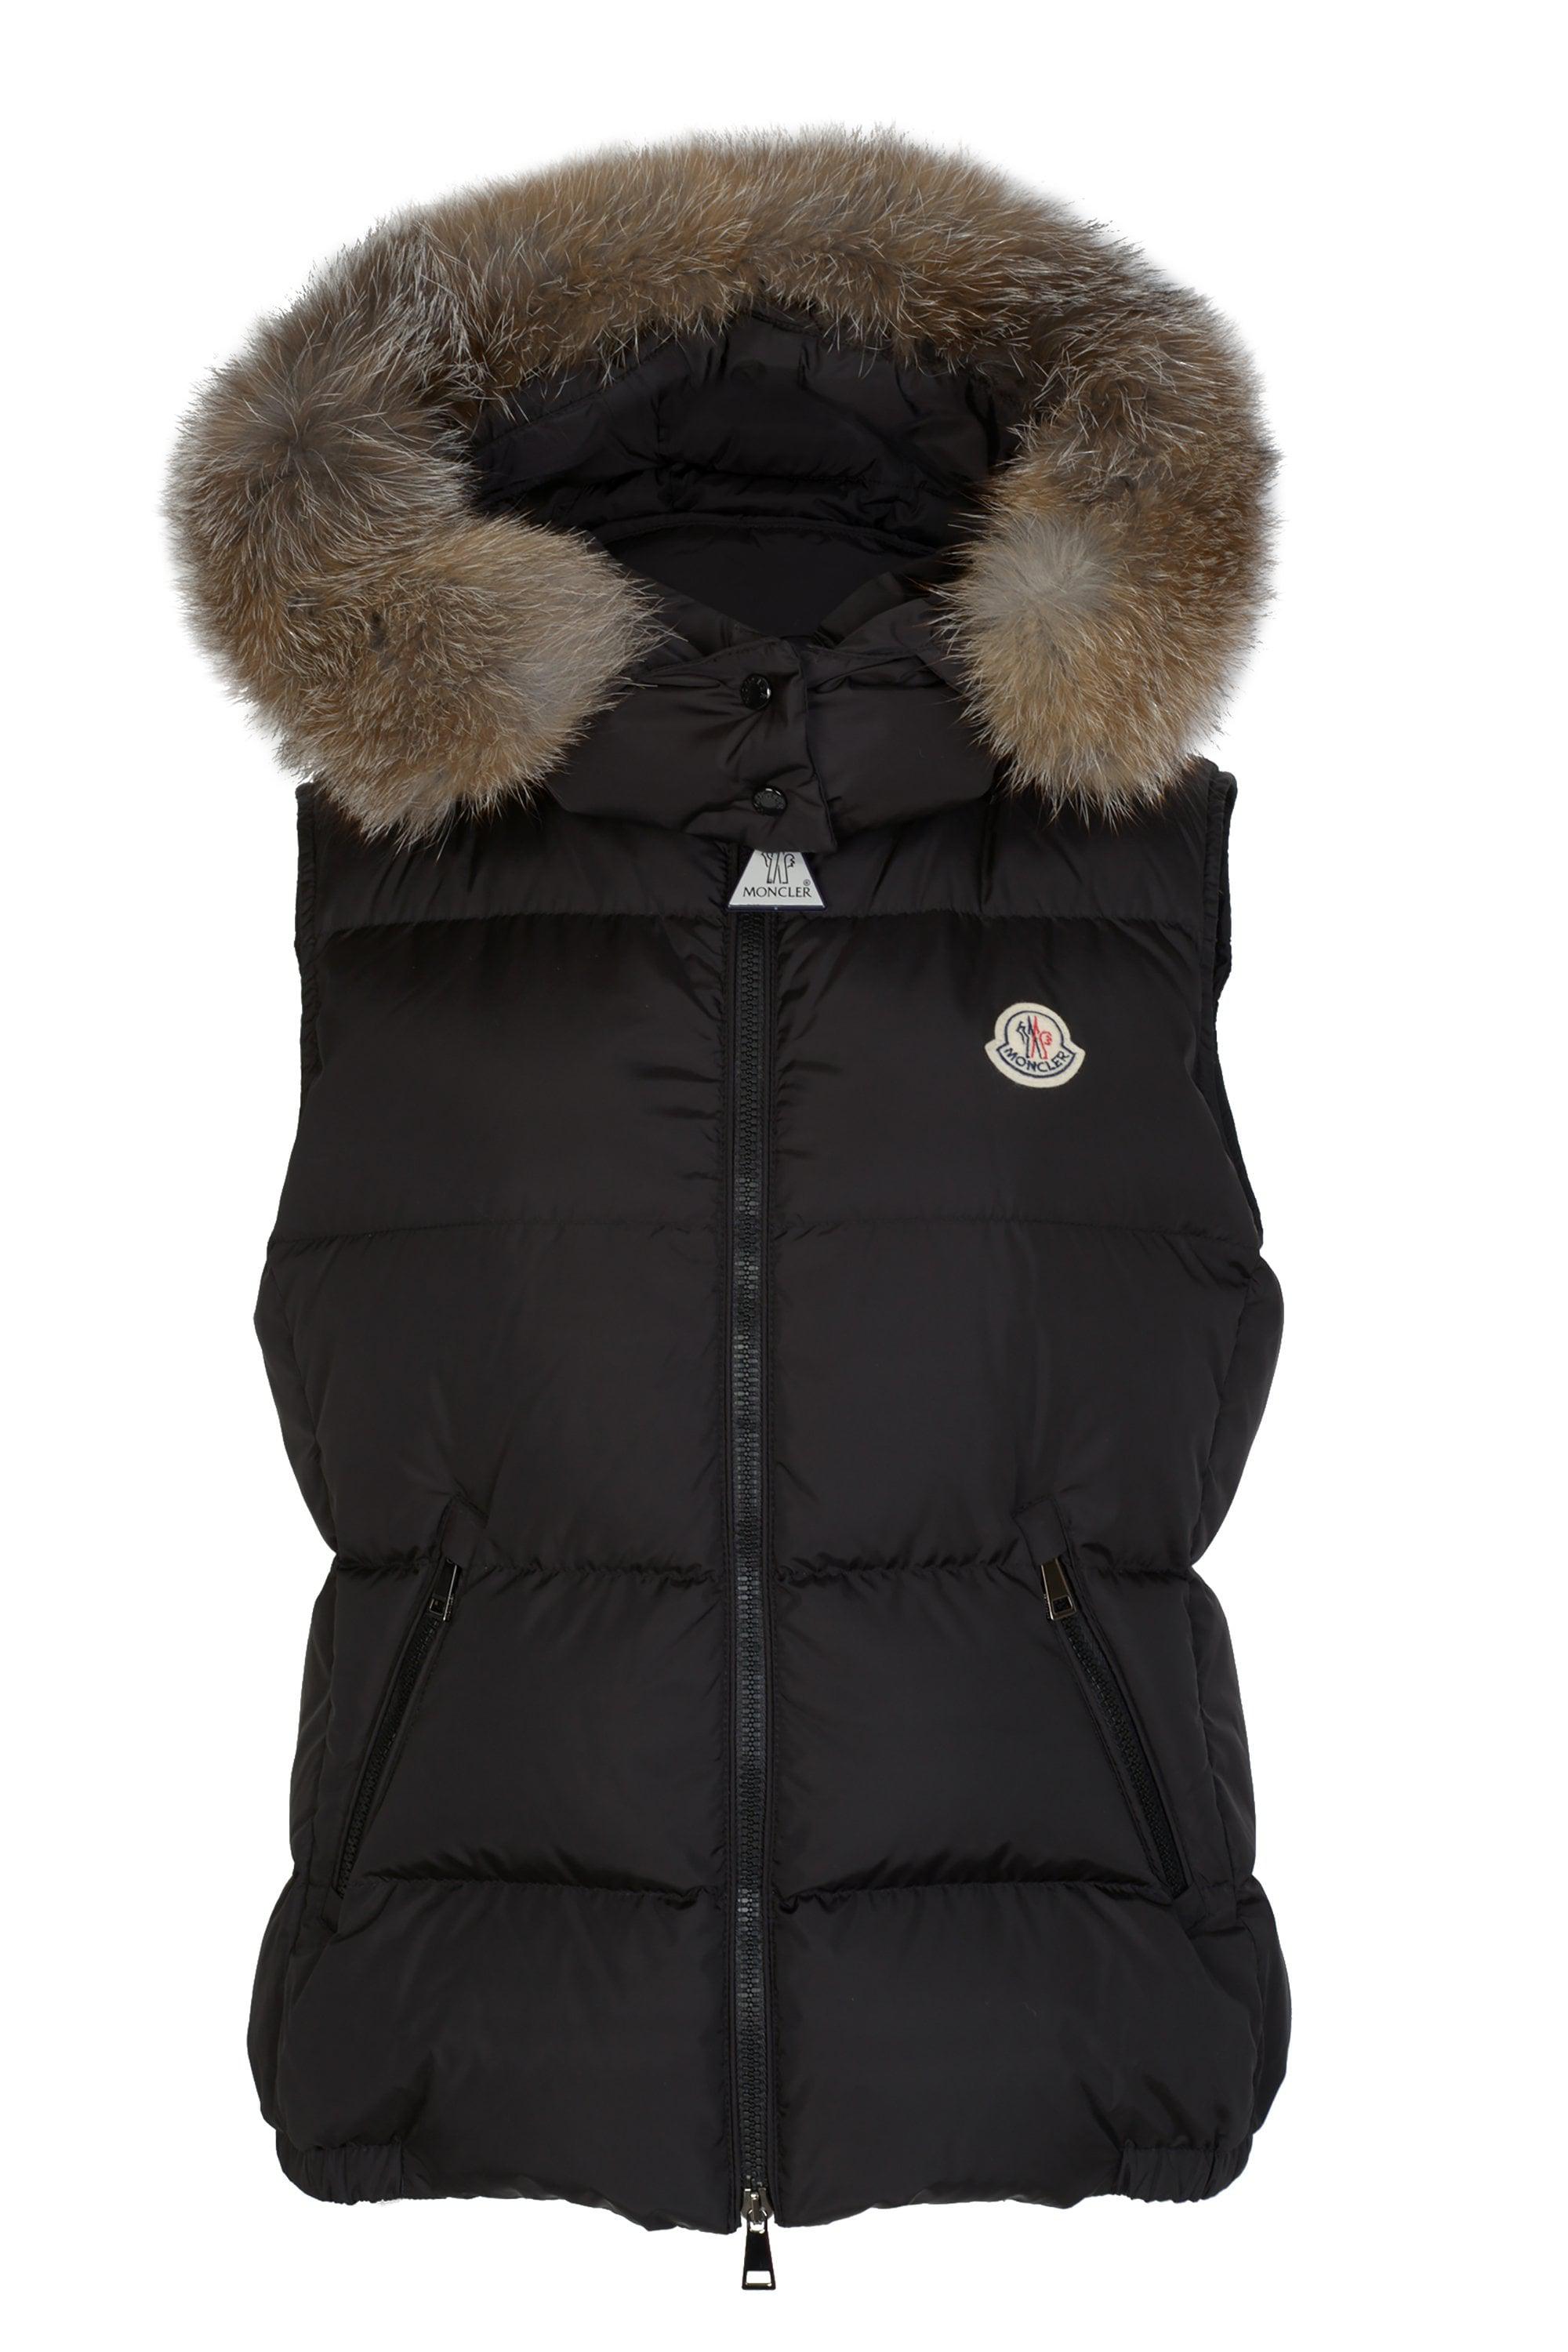 Moncler Body Warmer Fur Hood Cheap Sale, SAVE 56% - eagleflair.com